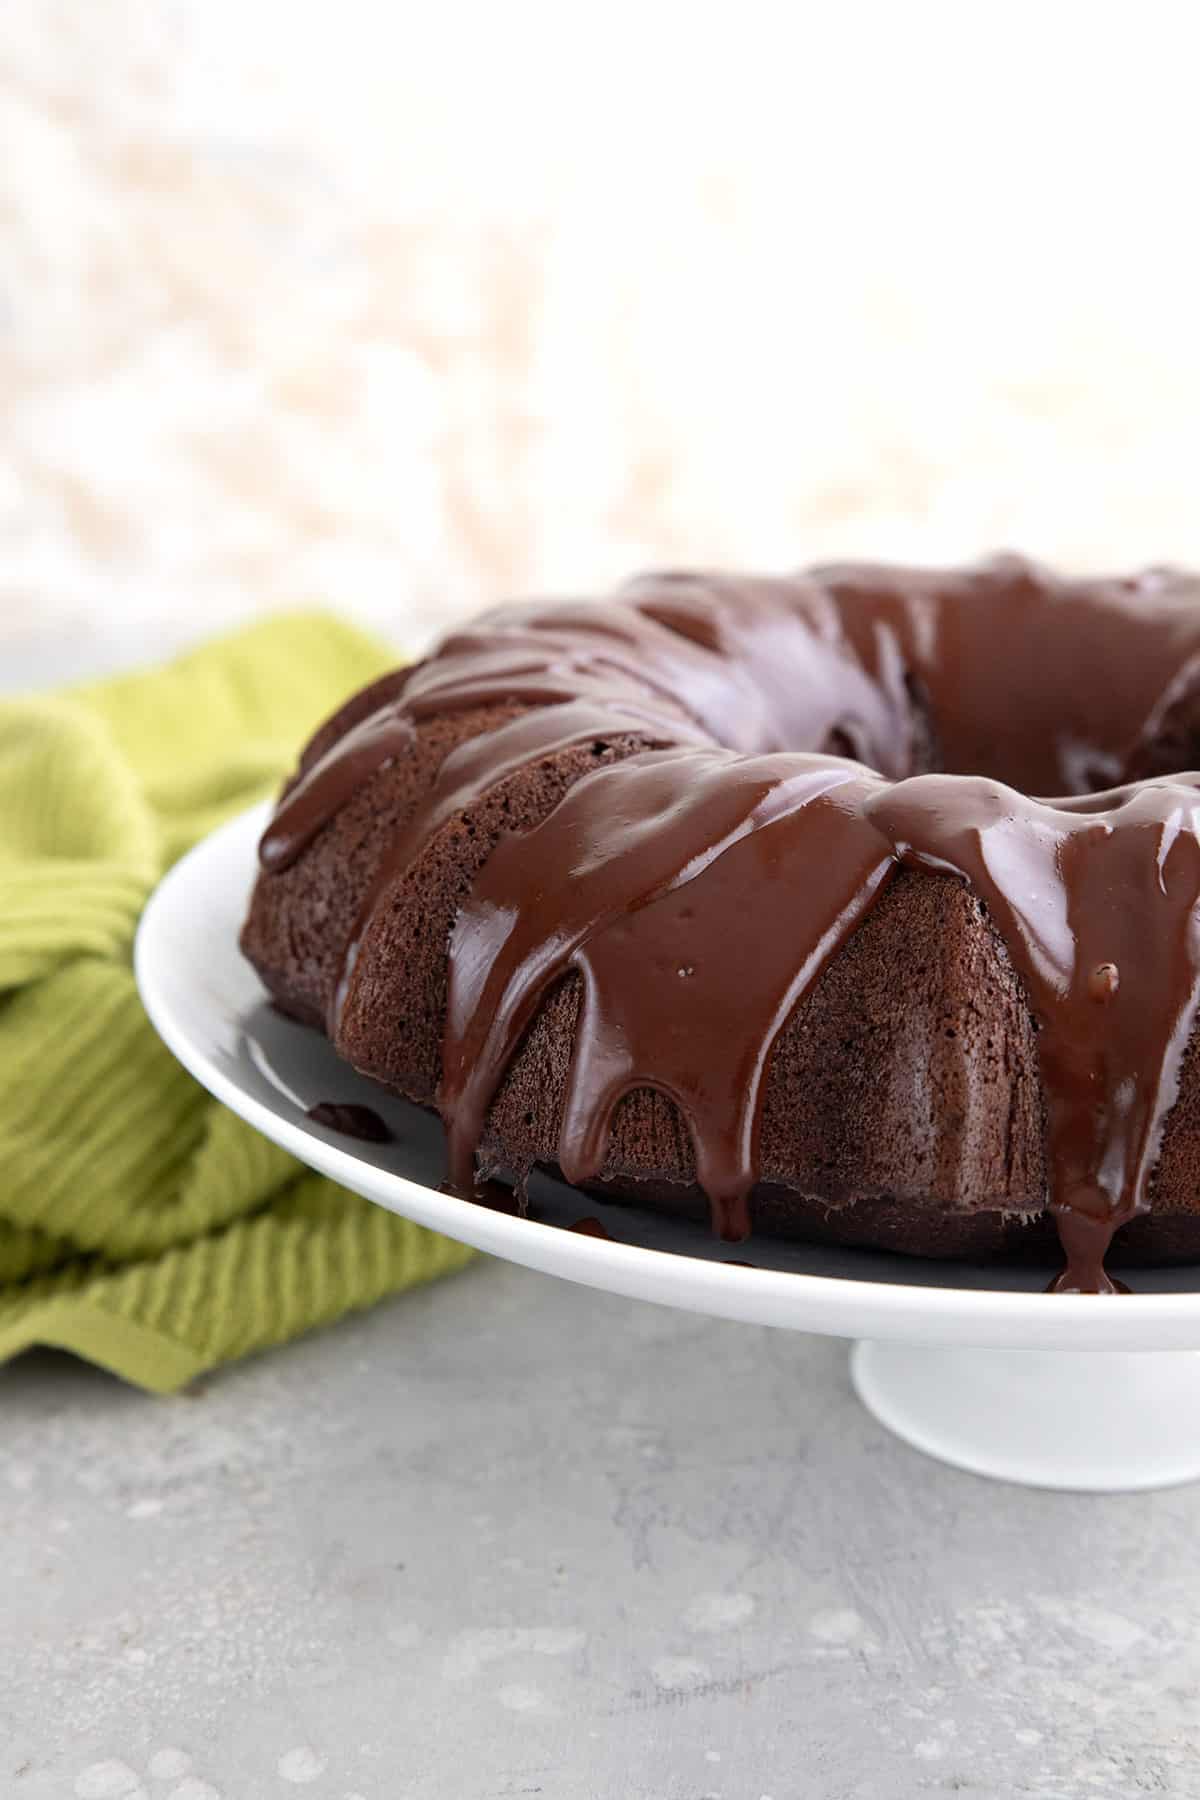 Keto Chocolate Bunt Cake with chocolate glaze on a white cake platter.